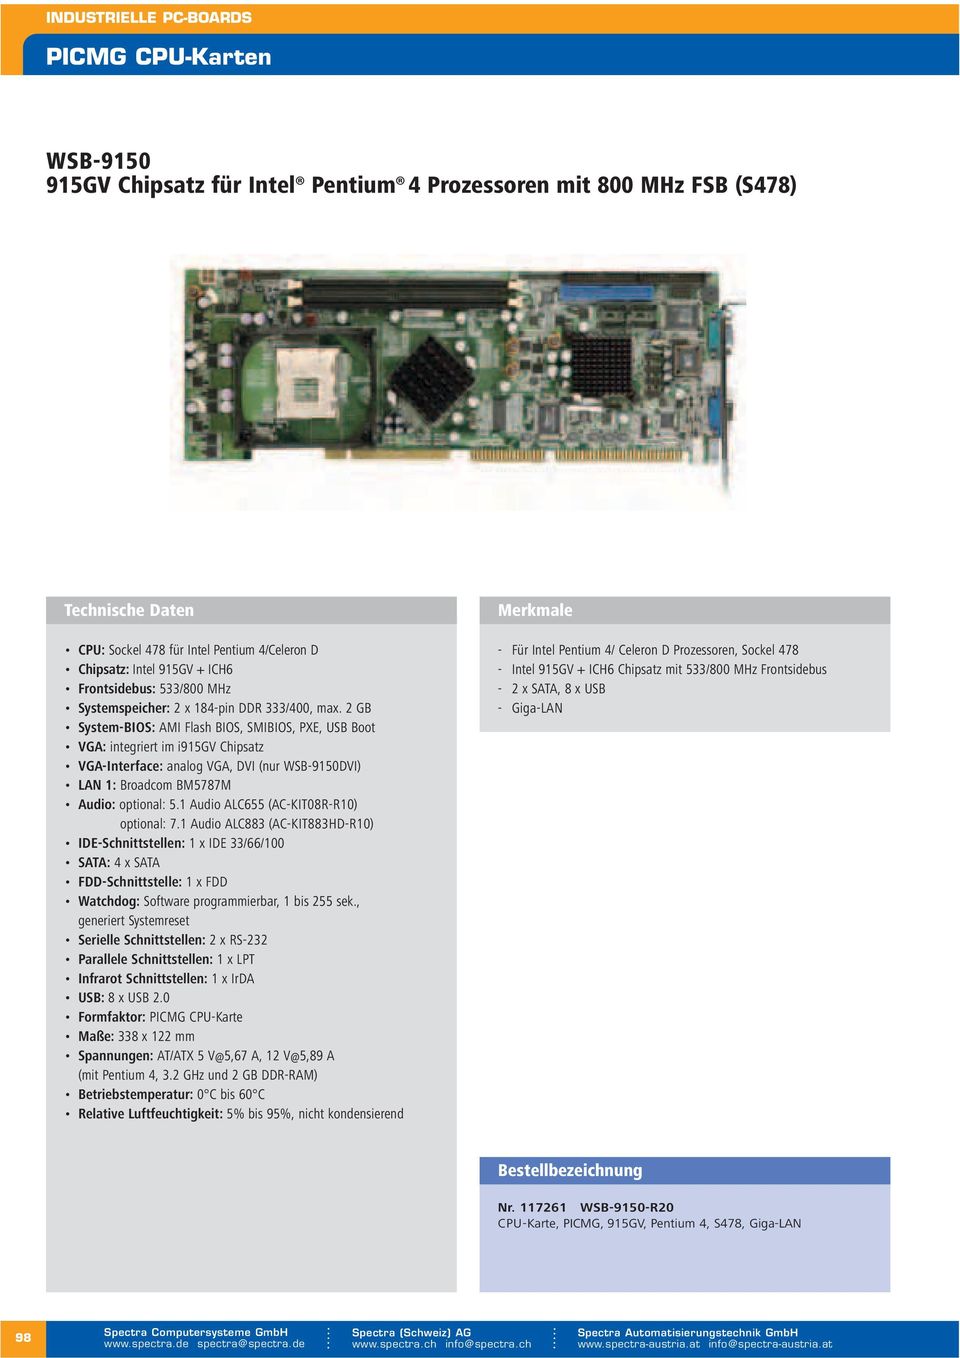 2 GB System-BIOS: AMI Flash BIOS, SMIBIOS, PXE, USB Boot VGA: im i915gv Chipsatz VGA-Interface: analog VGA, DVI (nur WSB-9150DVI) LAN 1: Broadcom BM5787M Audio: optional: 5.